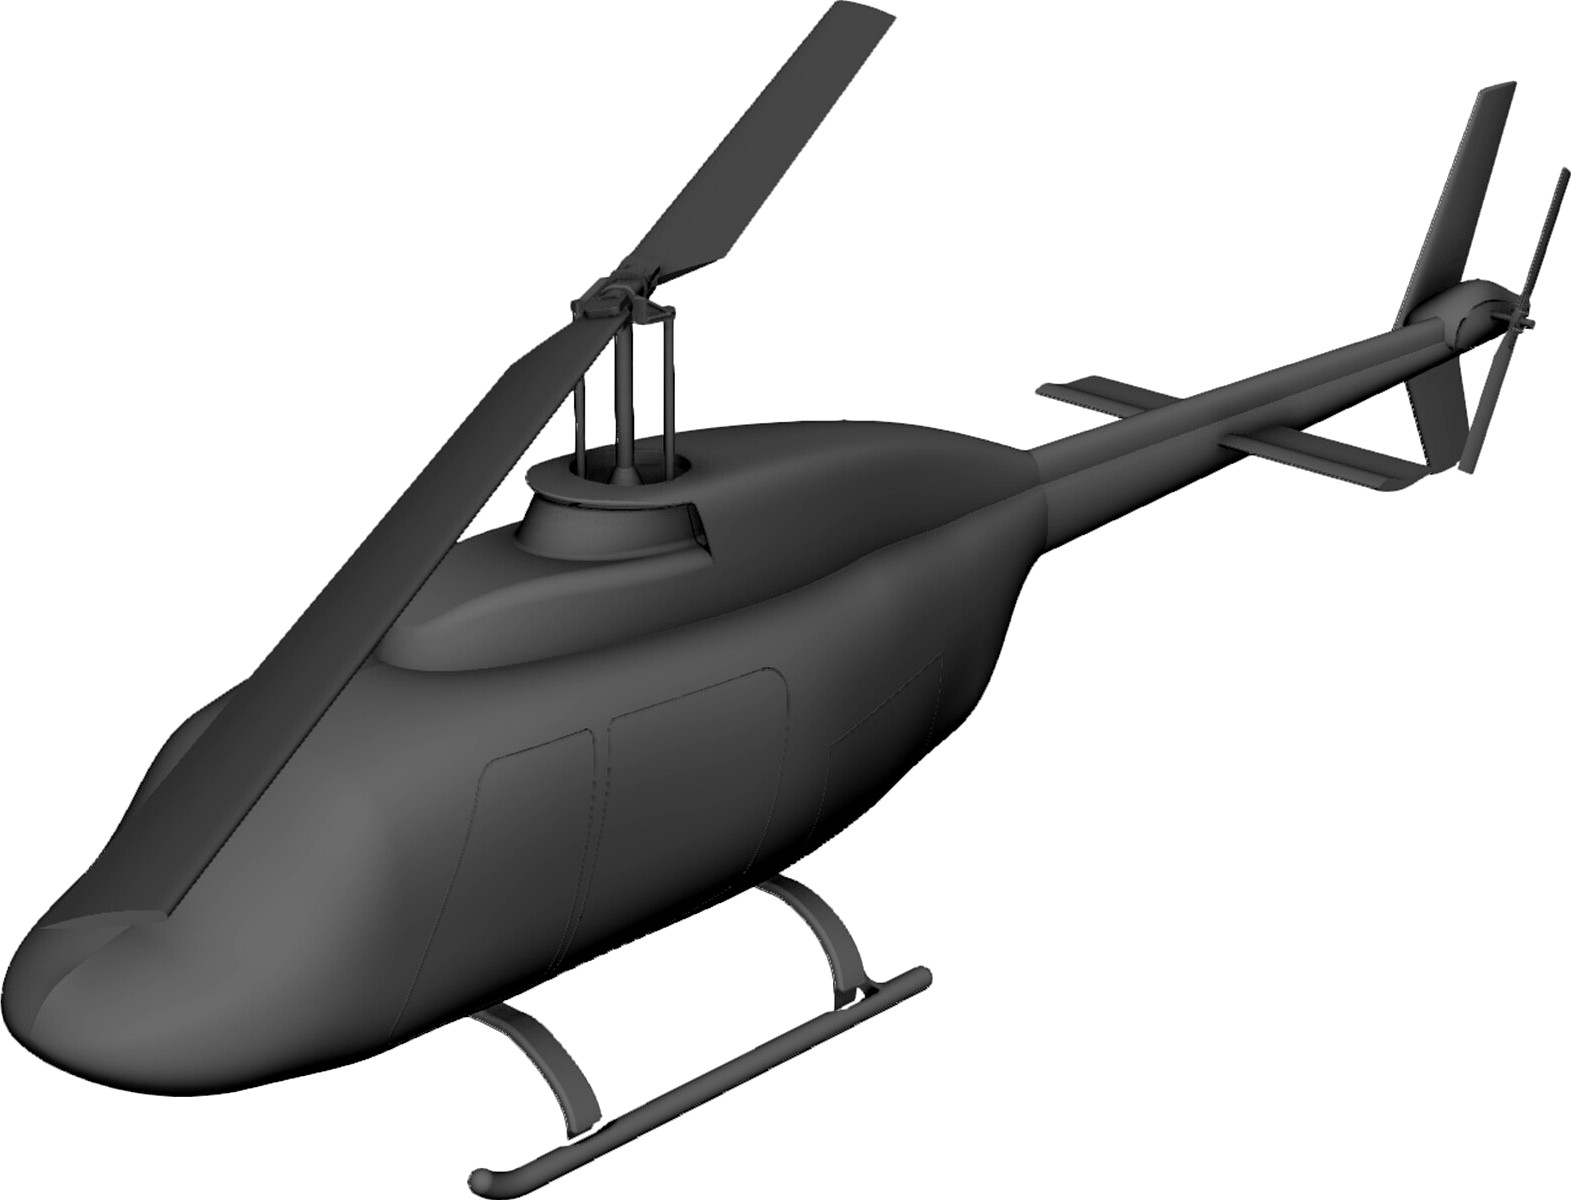 Bell 206B-III JetRanger 3D CAD Model